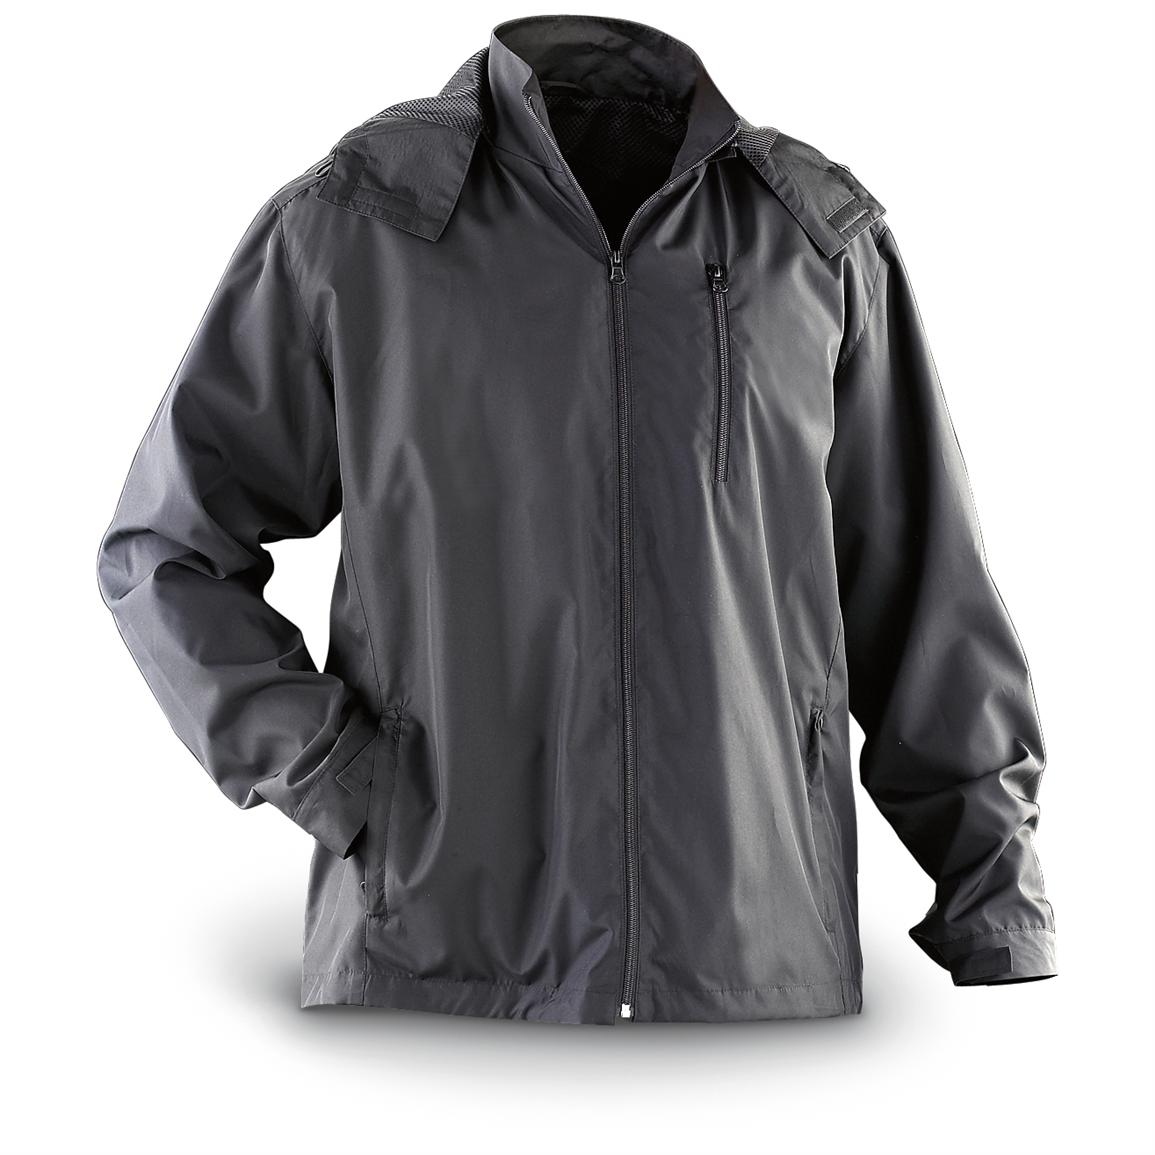 Totes® Rain Jacket - 179830, Rain Jackets & Rain Gear at Sportsman's Guide